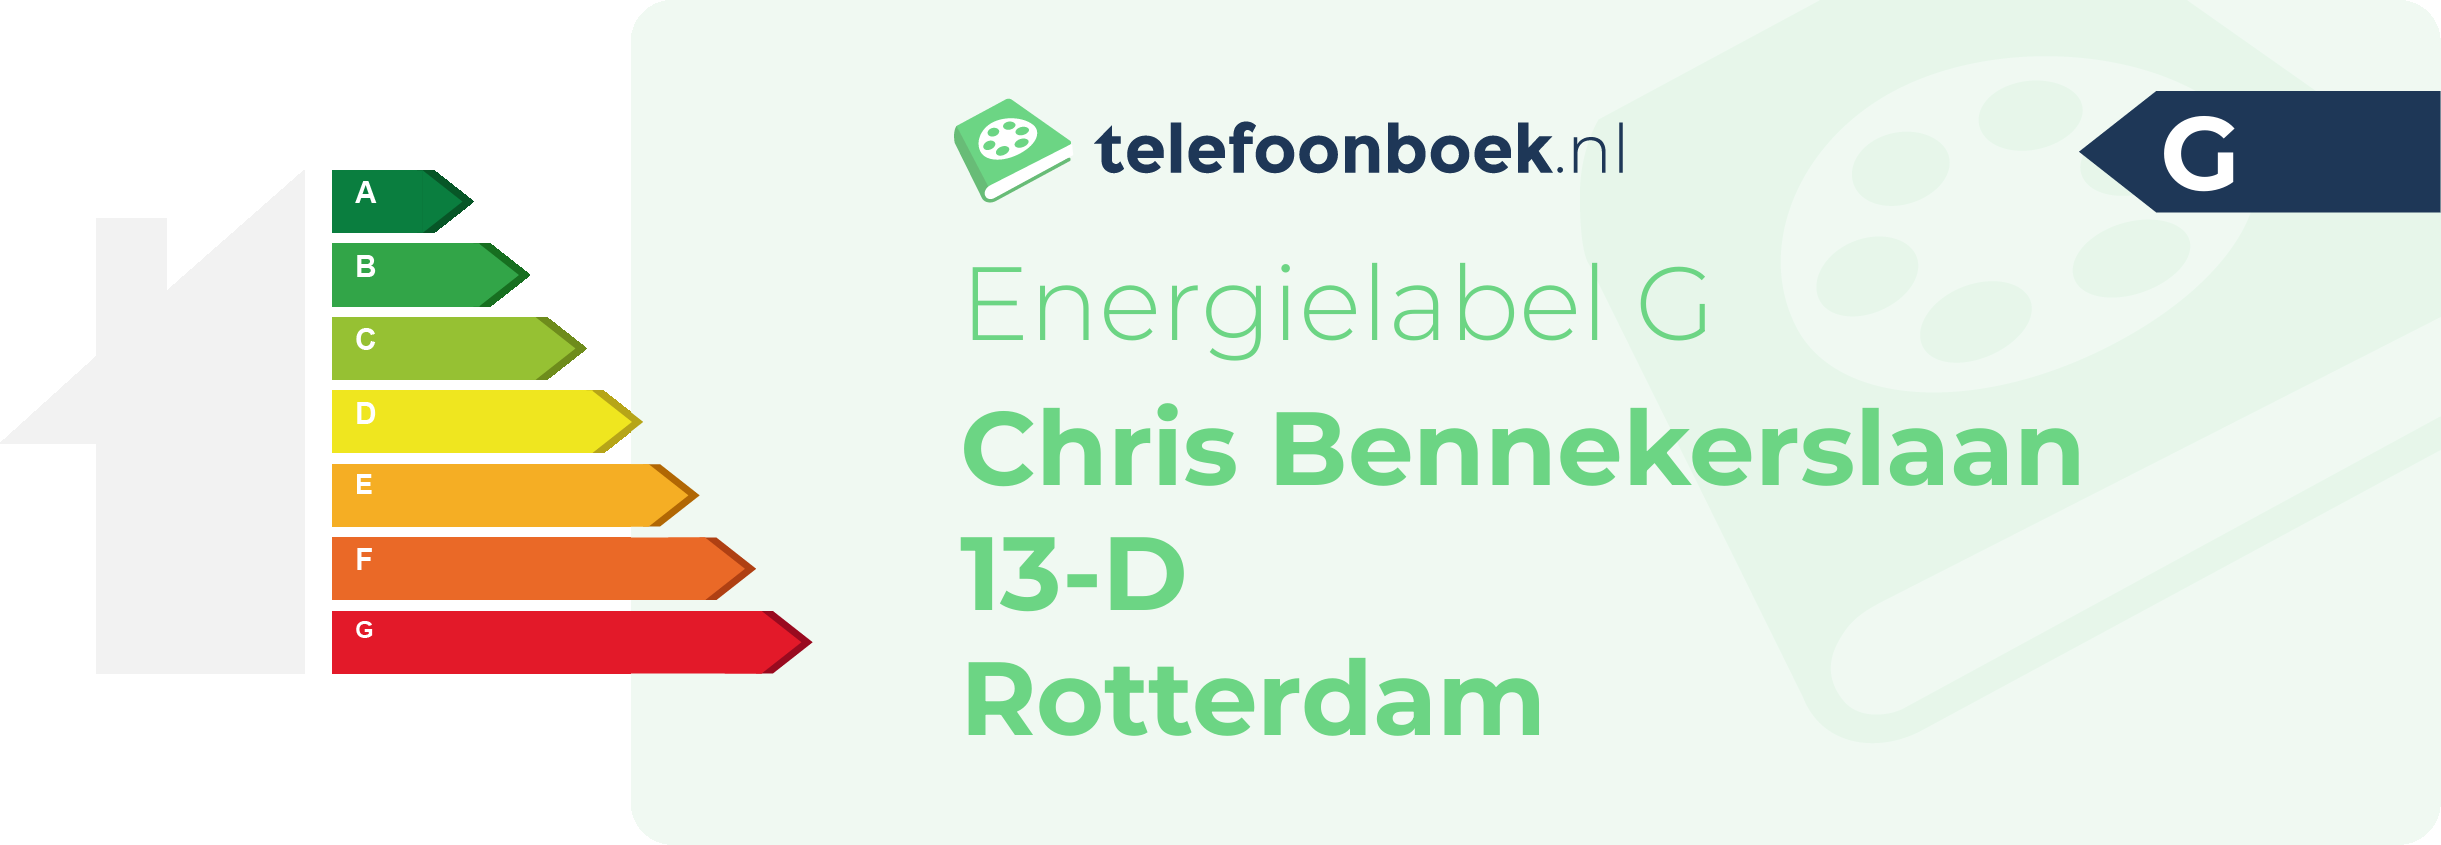 Energielabel Chris Bennekerslaan 13-D Rotterdam